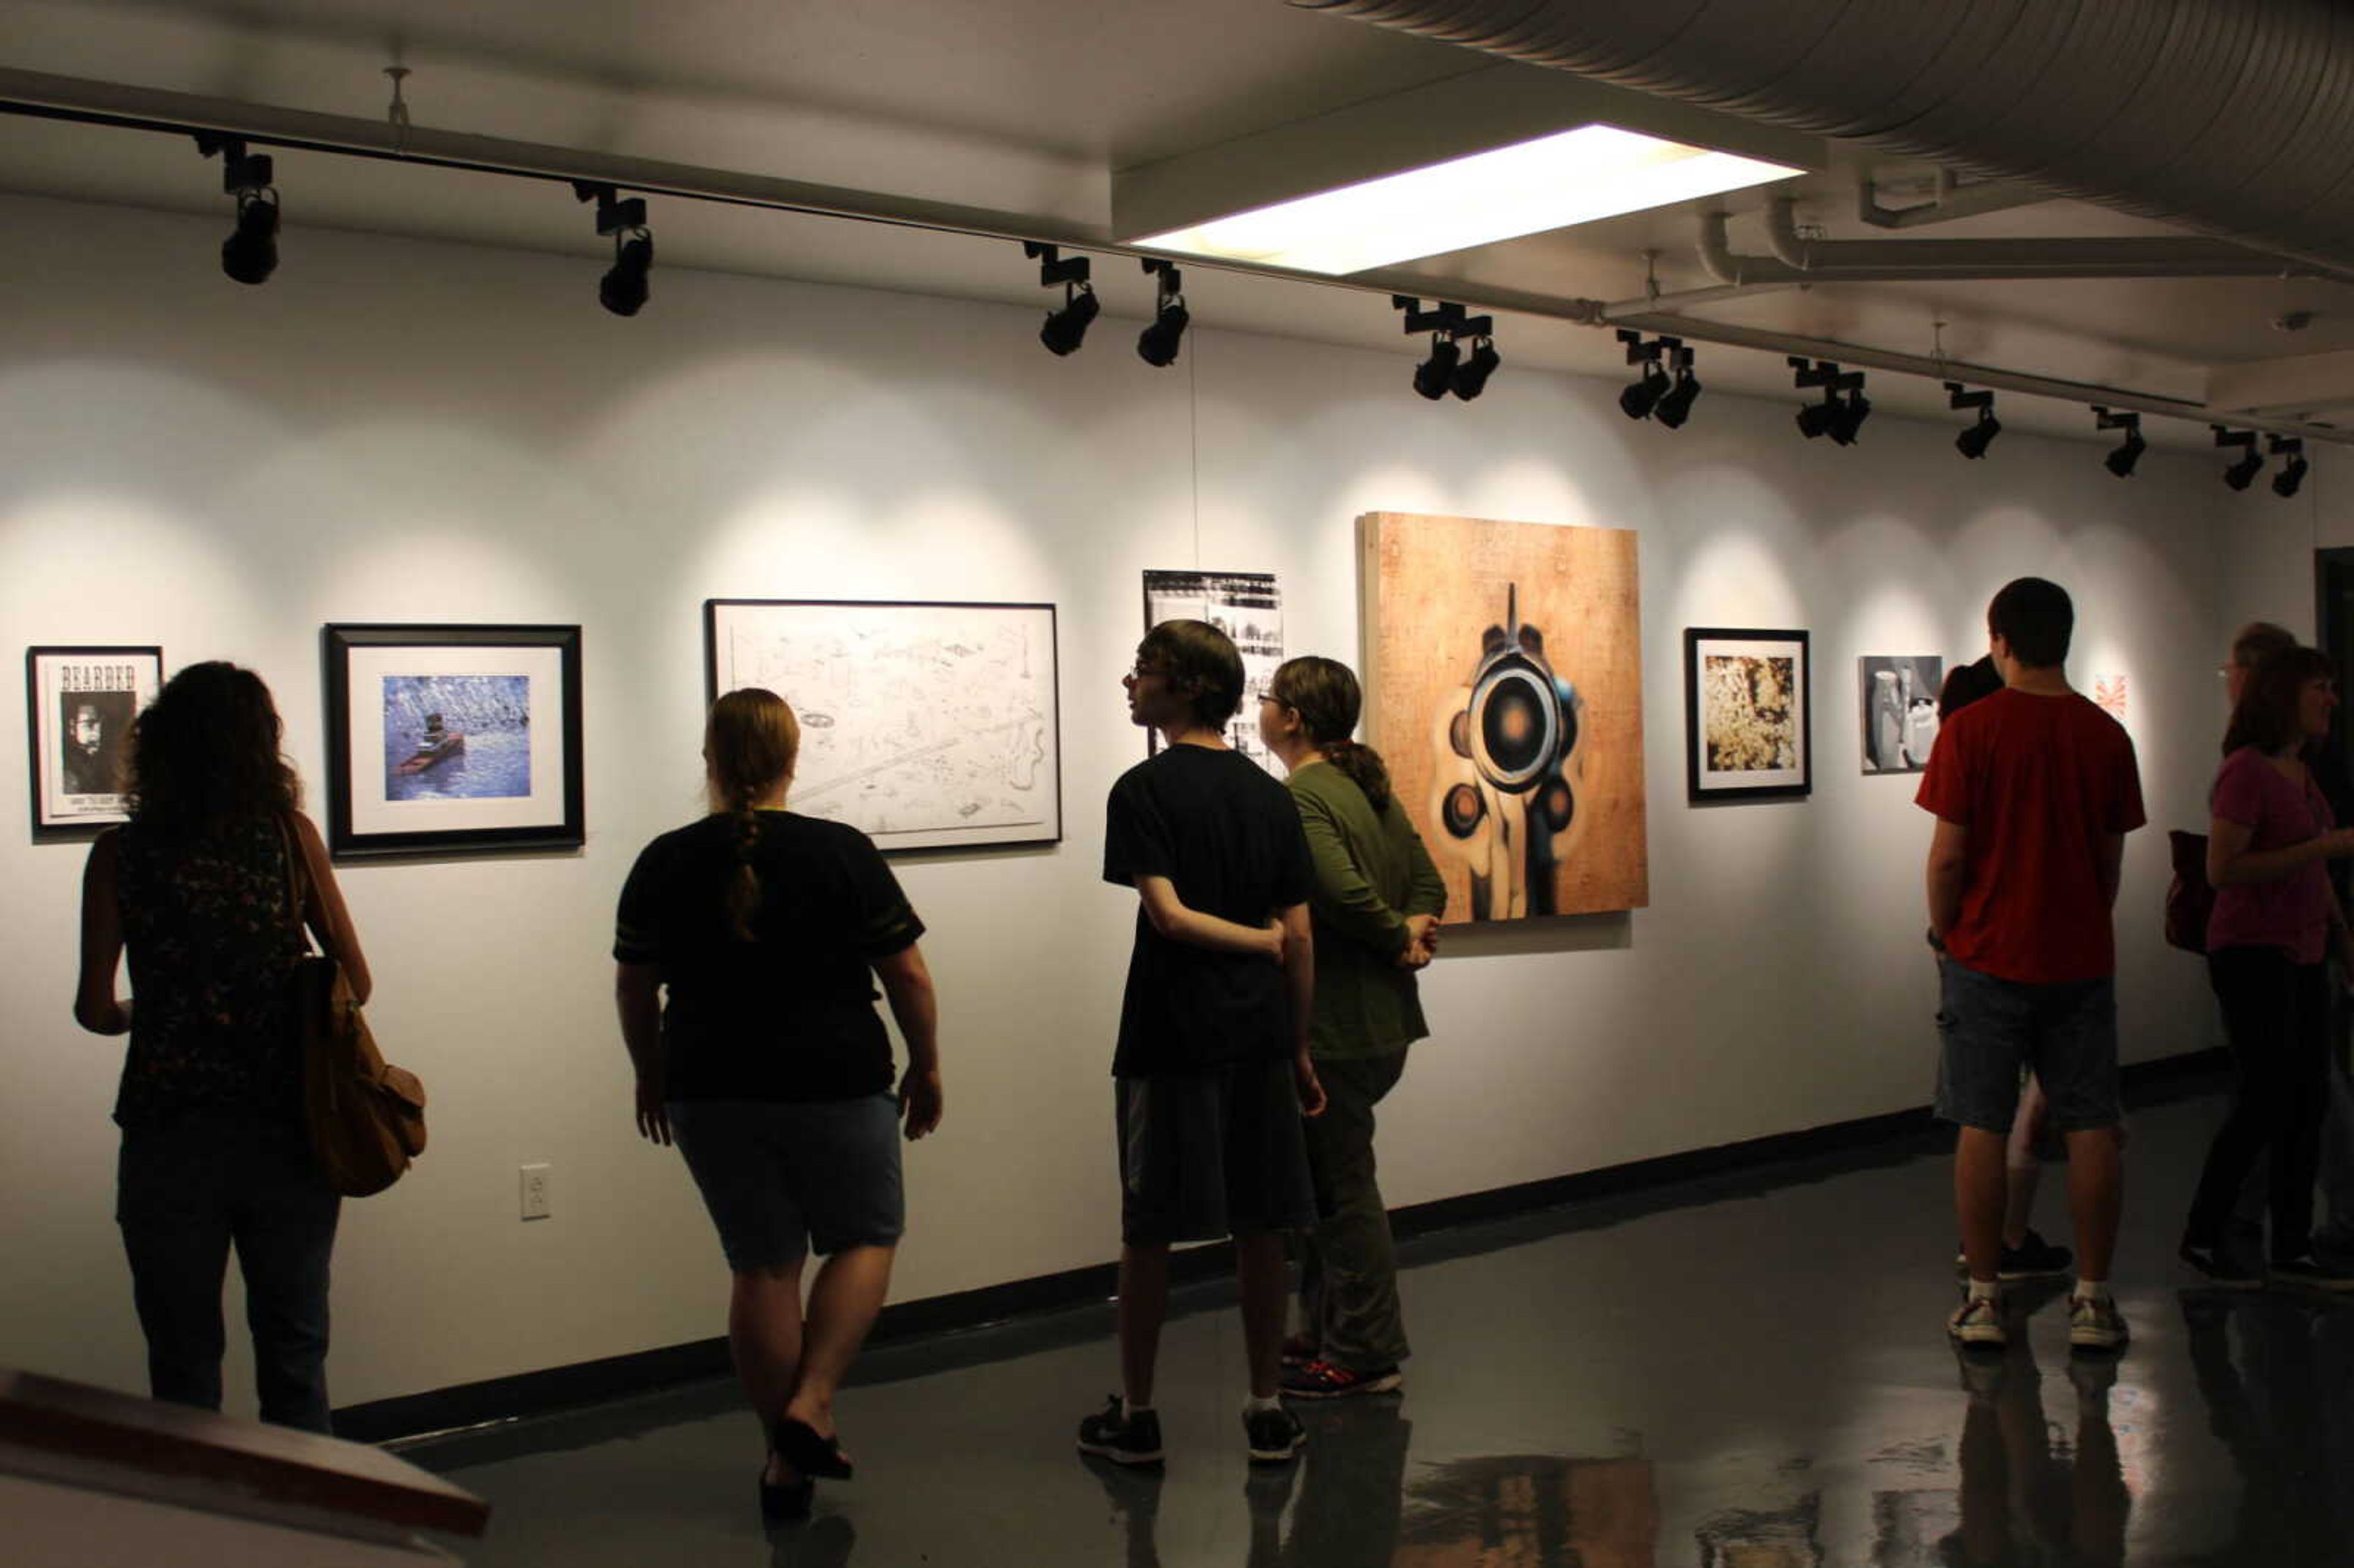 Art Guild exhibit shows student work